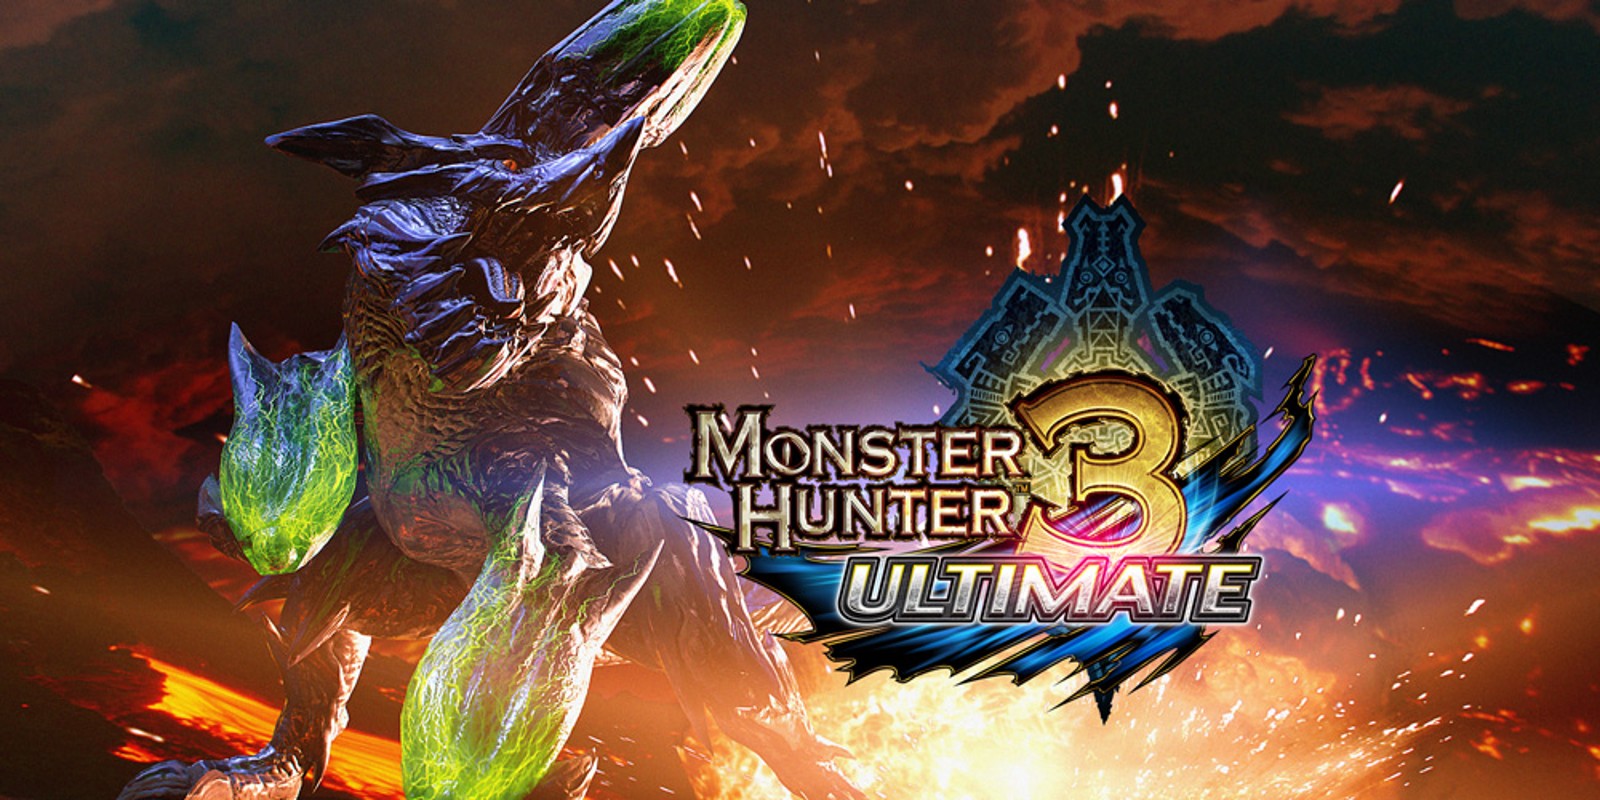 Kent Calor Respecto a Monster Hunter 3 Ultimate | Juegos de Nintendo 3DS | Juegos | Nintendo